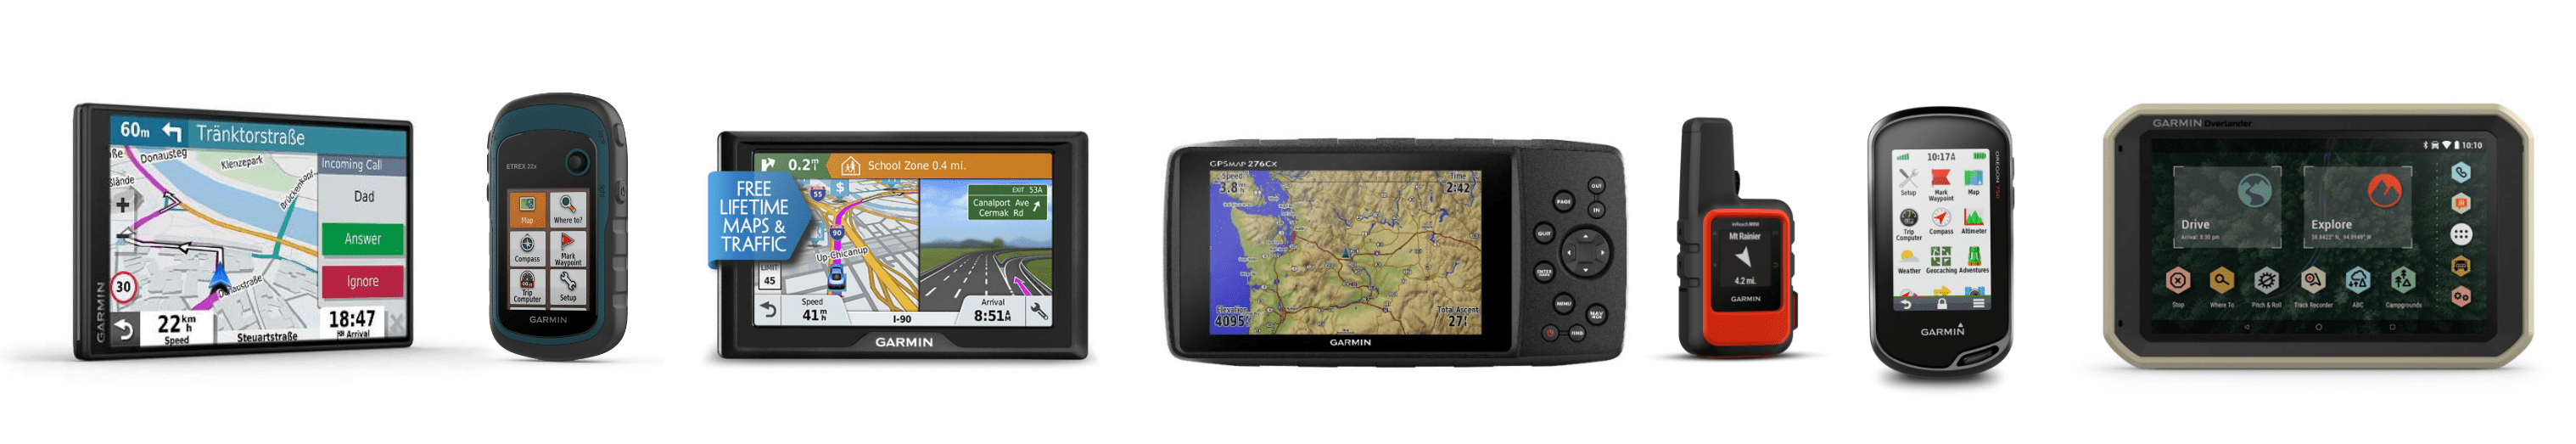 Complete Garmin GPS Mapset Download v21.06 - 5 Year Map Updates -  Tracks4Africa